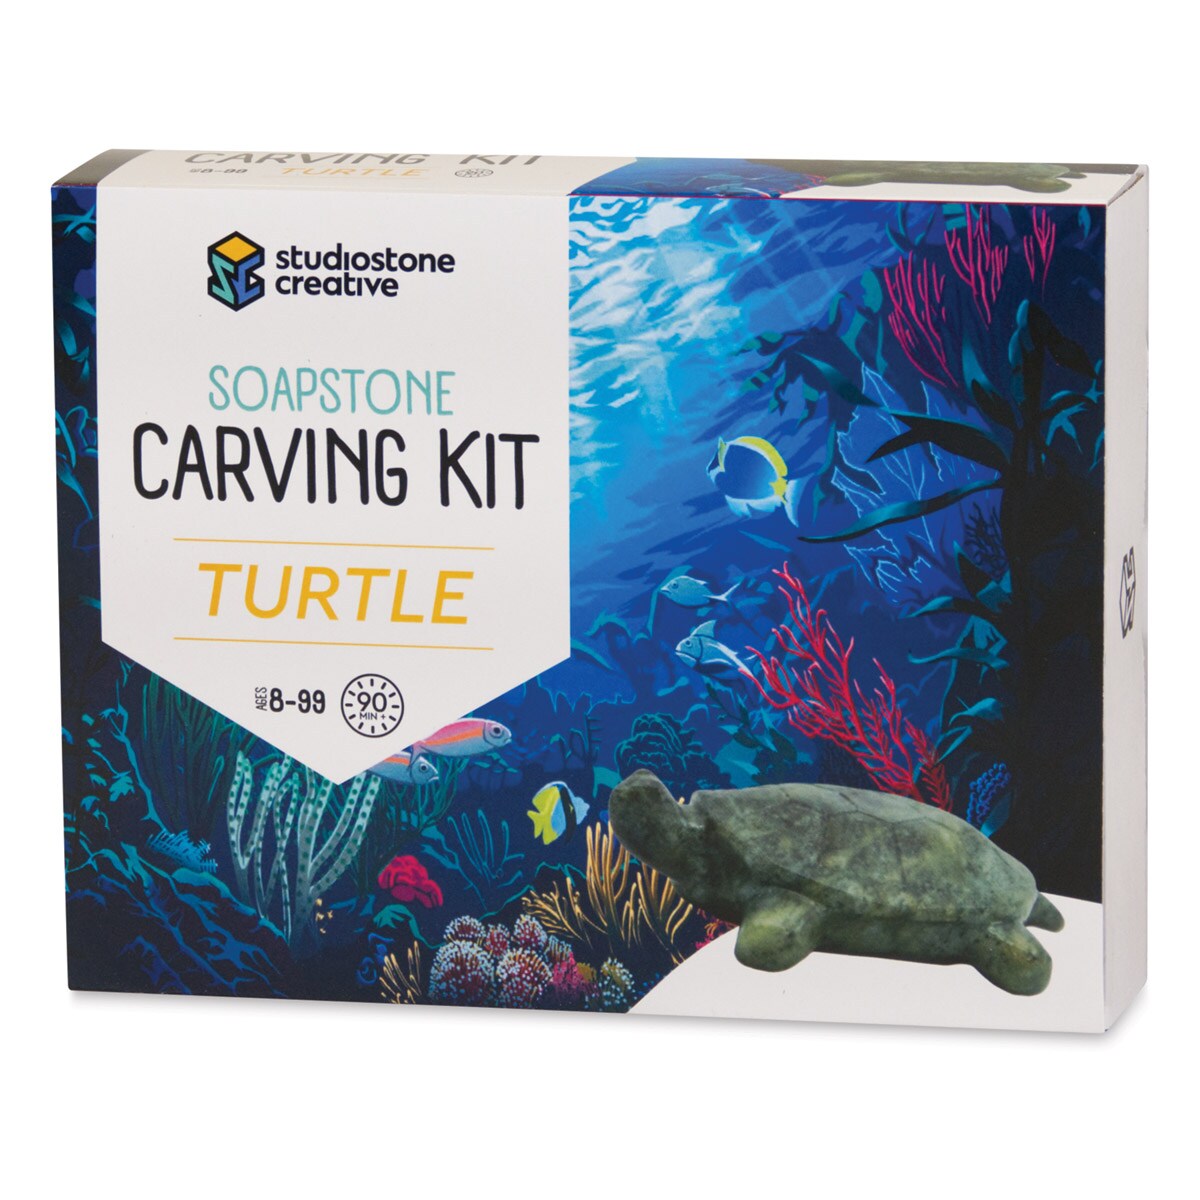 StudioStone Creative Soapstone Carving Kit-Turtle